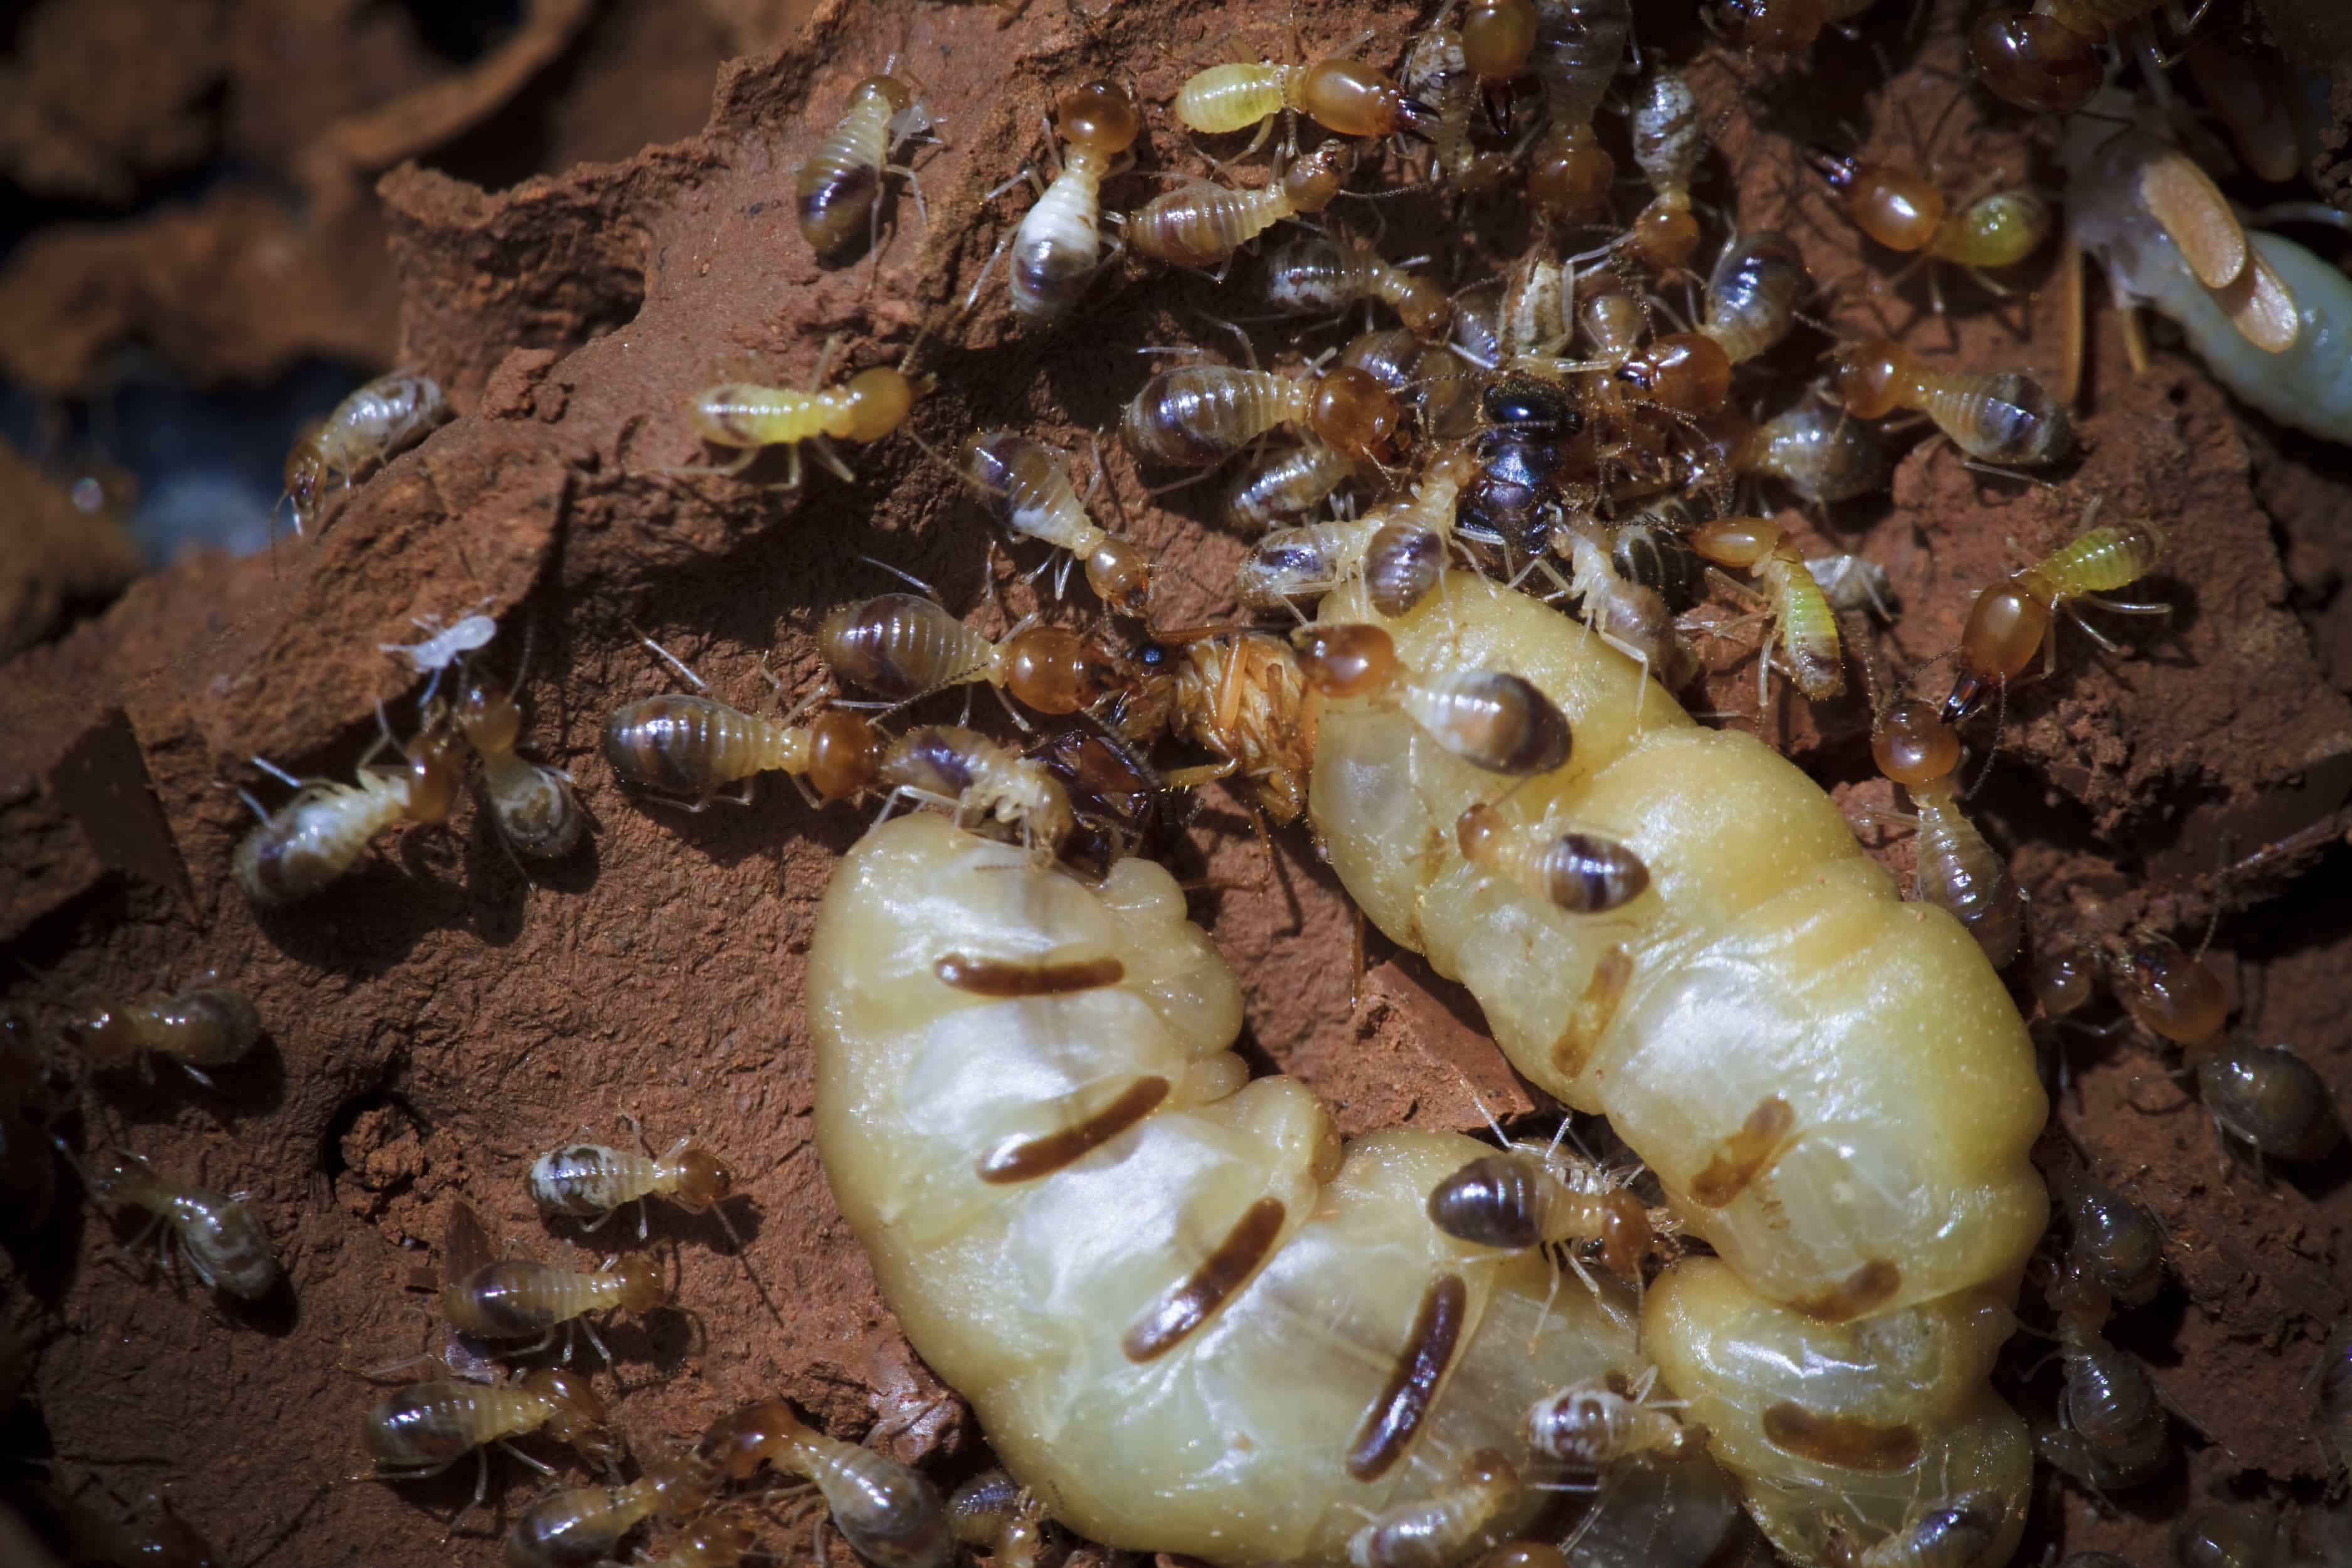 Subterranean Termite With Queen